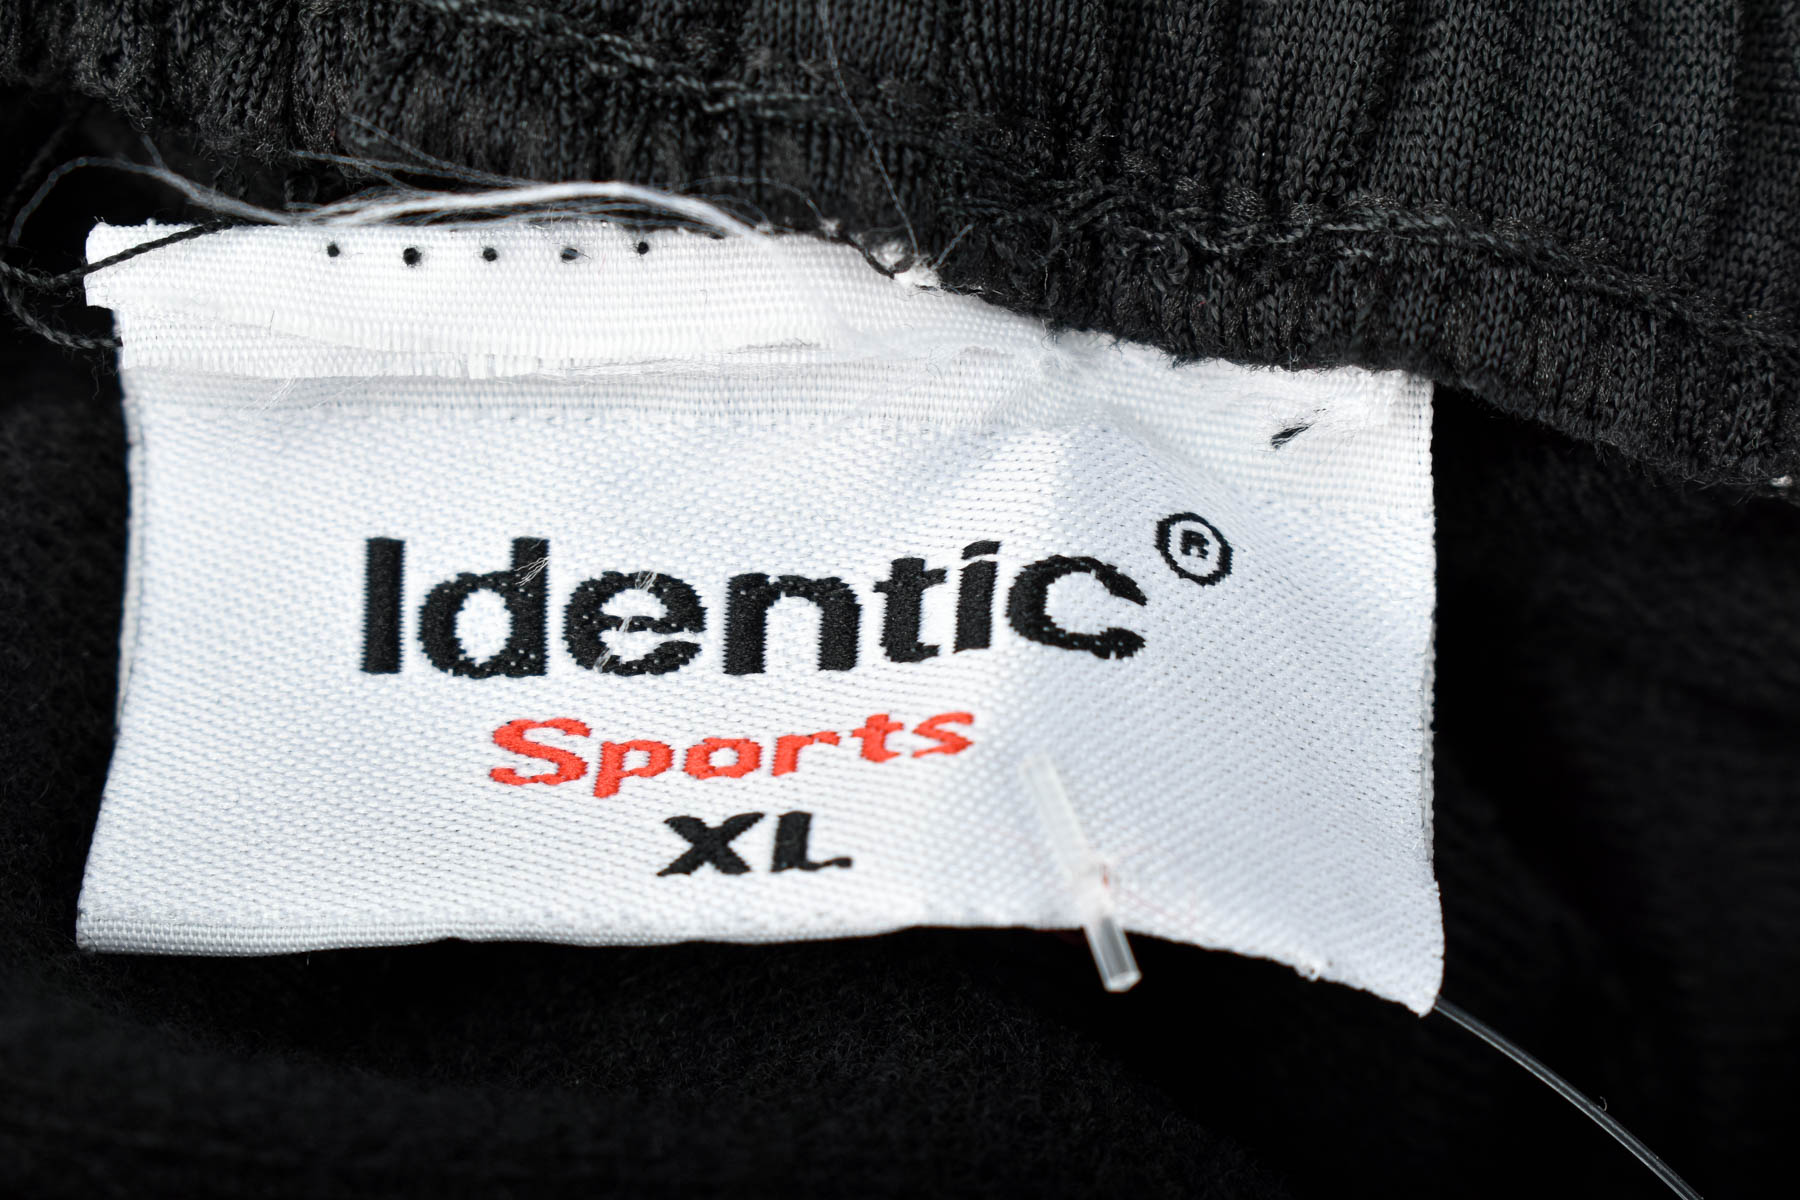 Men's shorts - Identic - 2